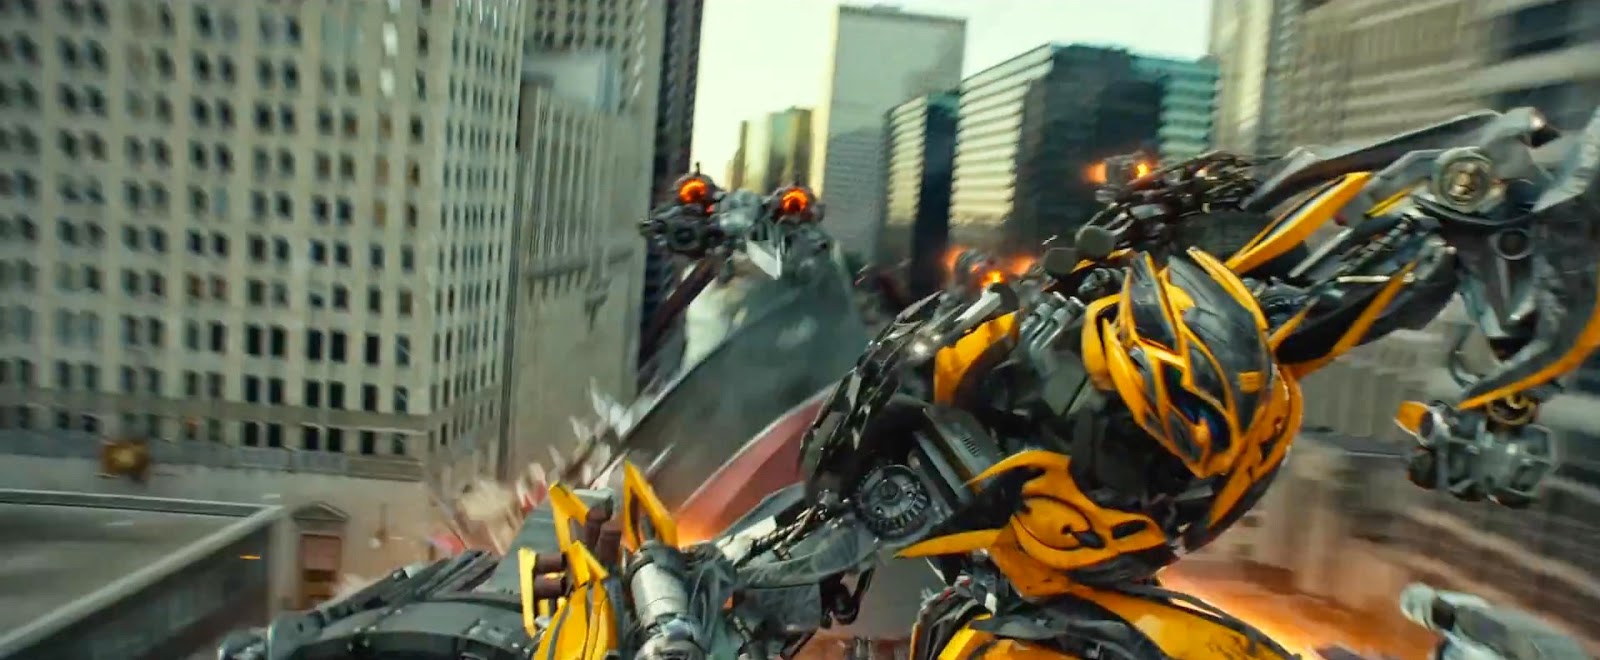 Transformers-4-Bumblebee-Battle-Mode • Classe Nerd - 1600 x 660 jpeg 162kB